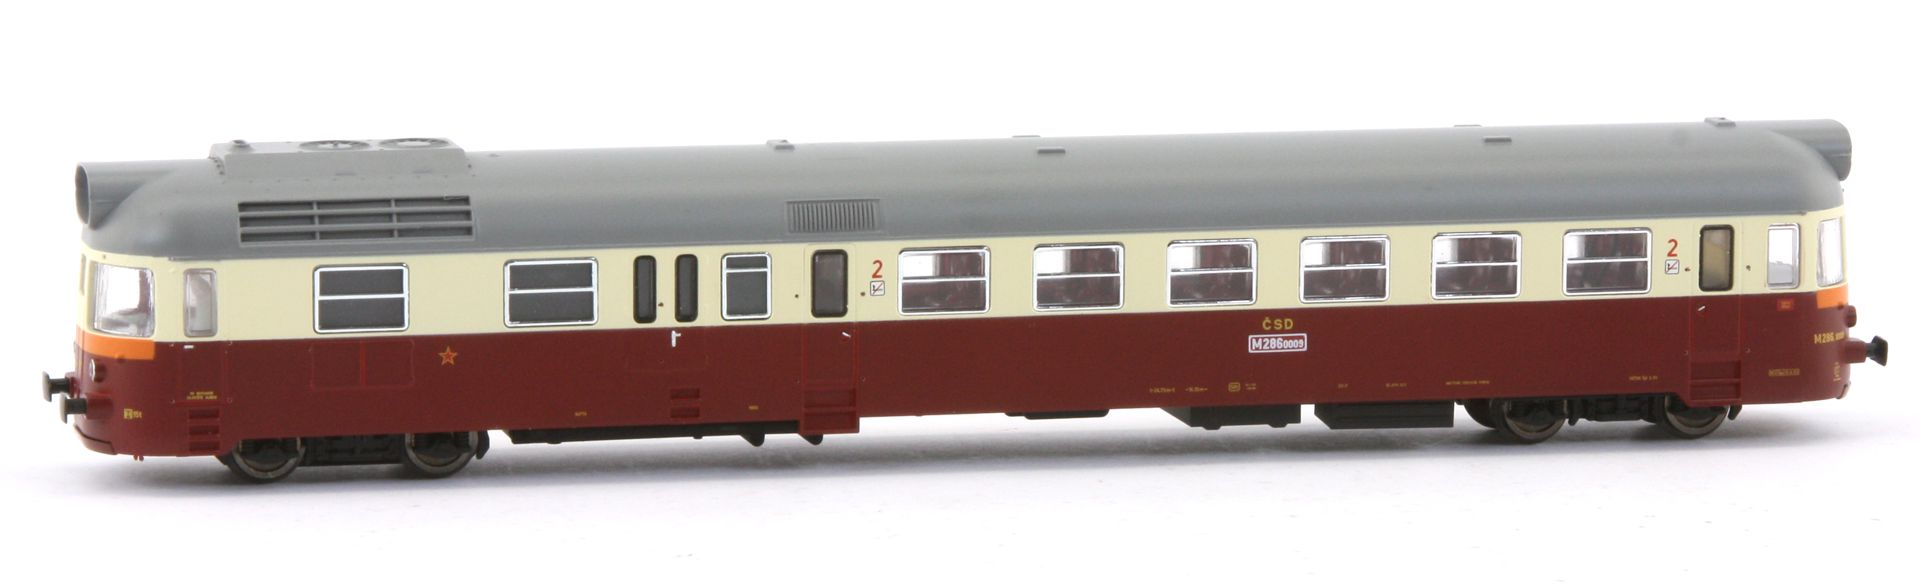 mtb TTCSDM2860009 - Triebwagen M286 0009, CSD, Ep.III-IV